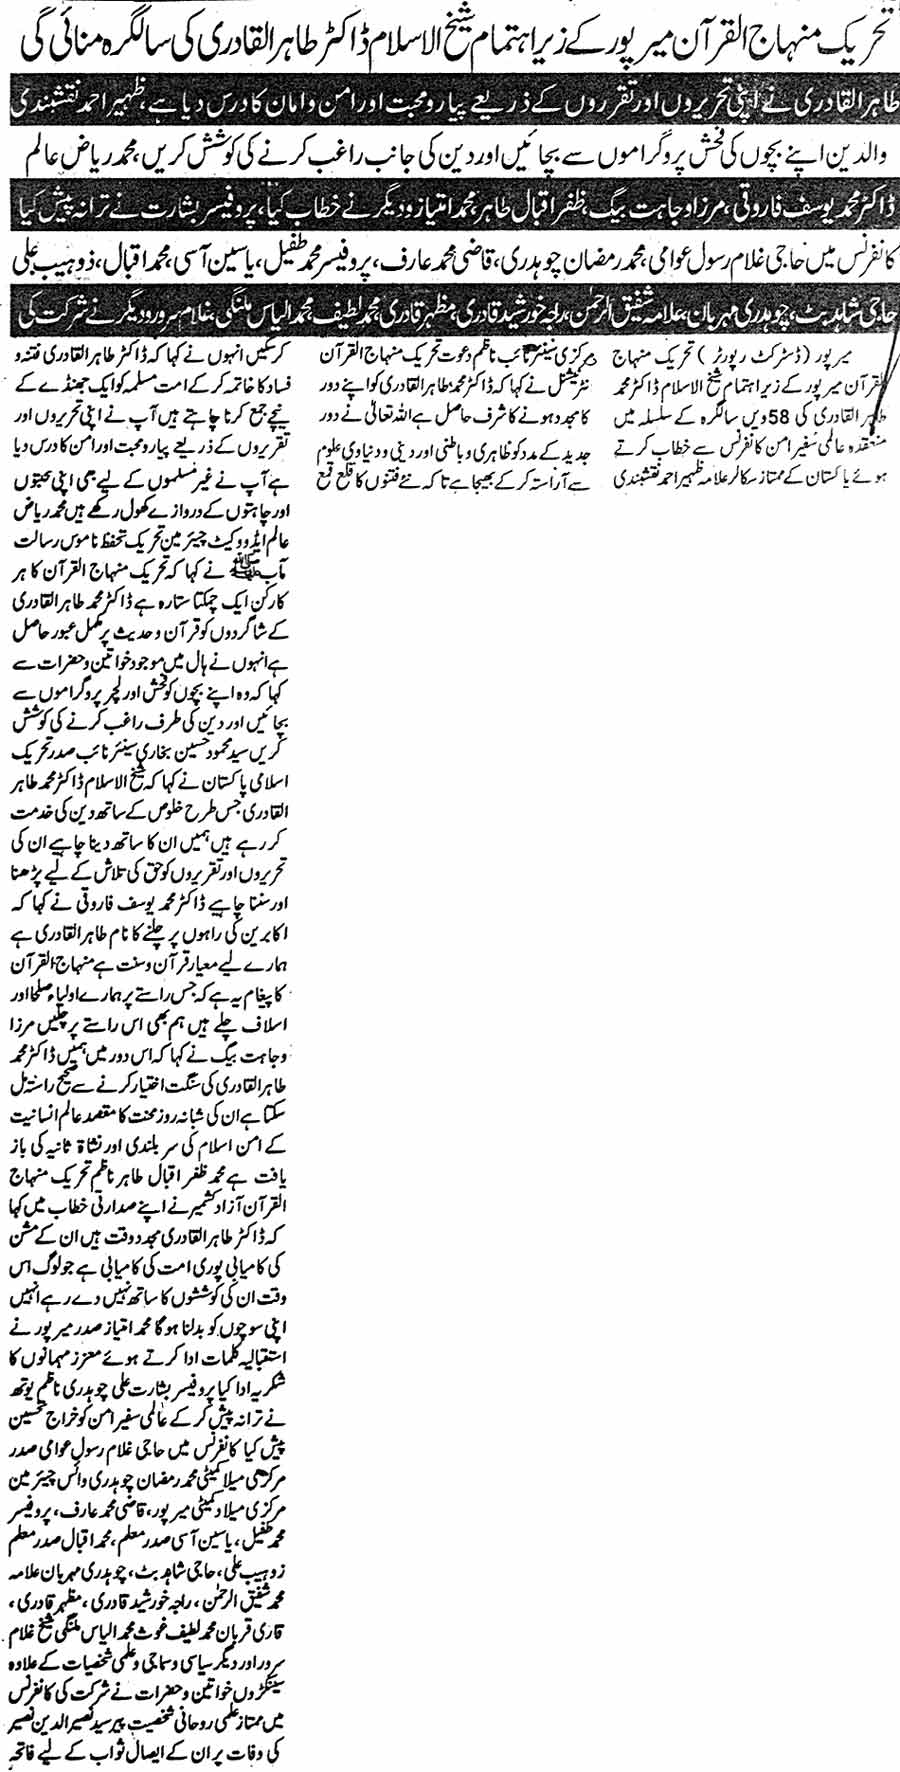 Minhaj-ul-Quran  Print Media Coverage Daily Jazba